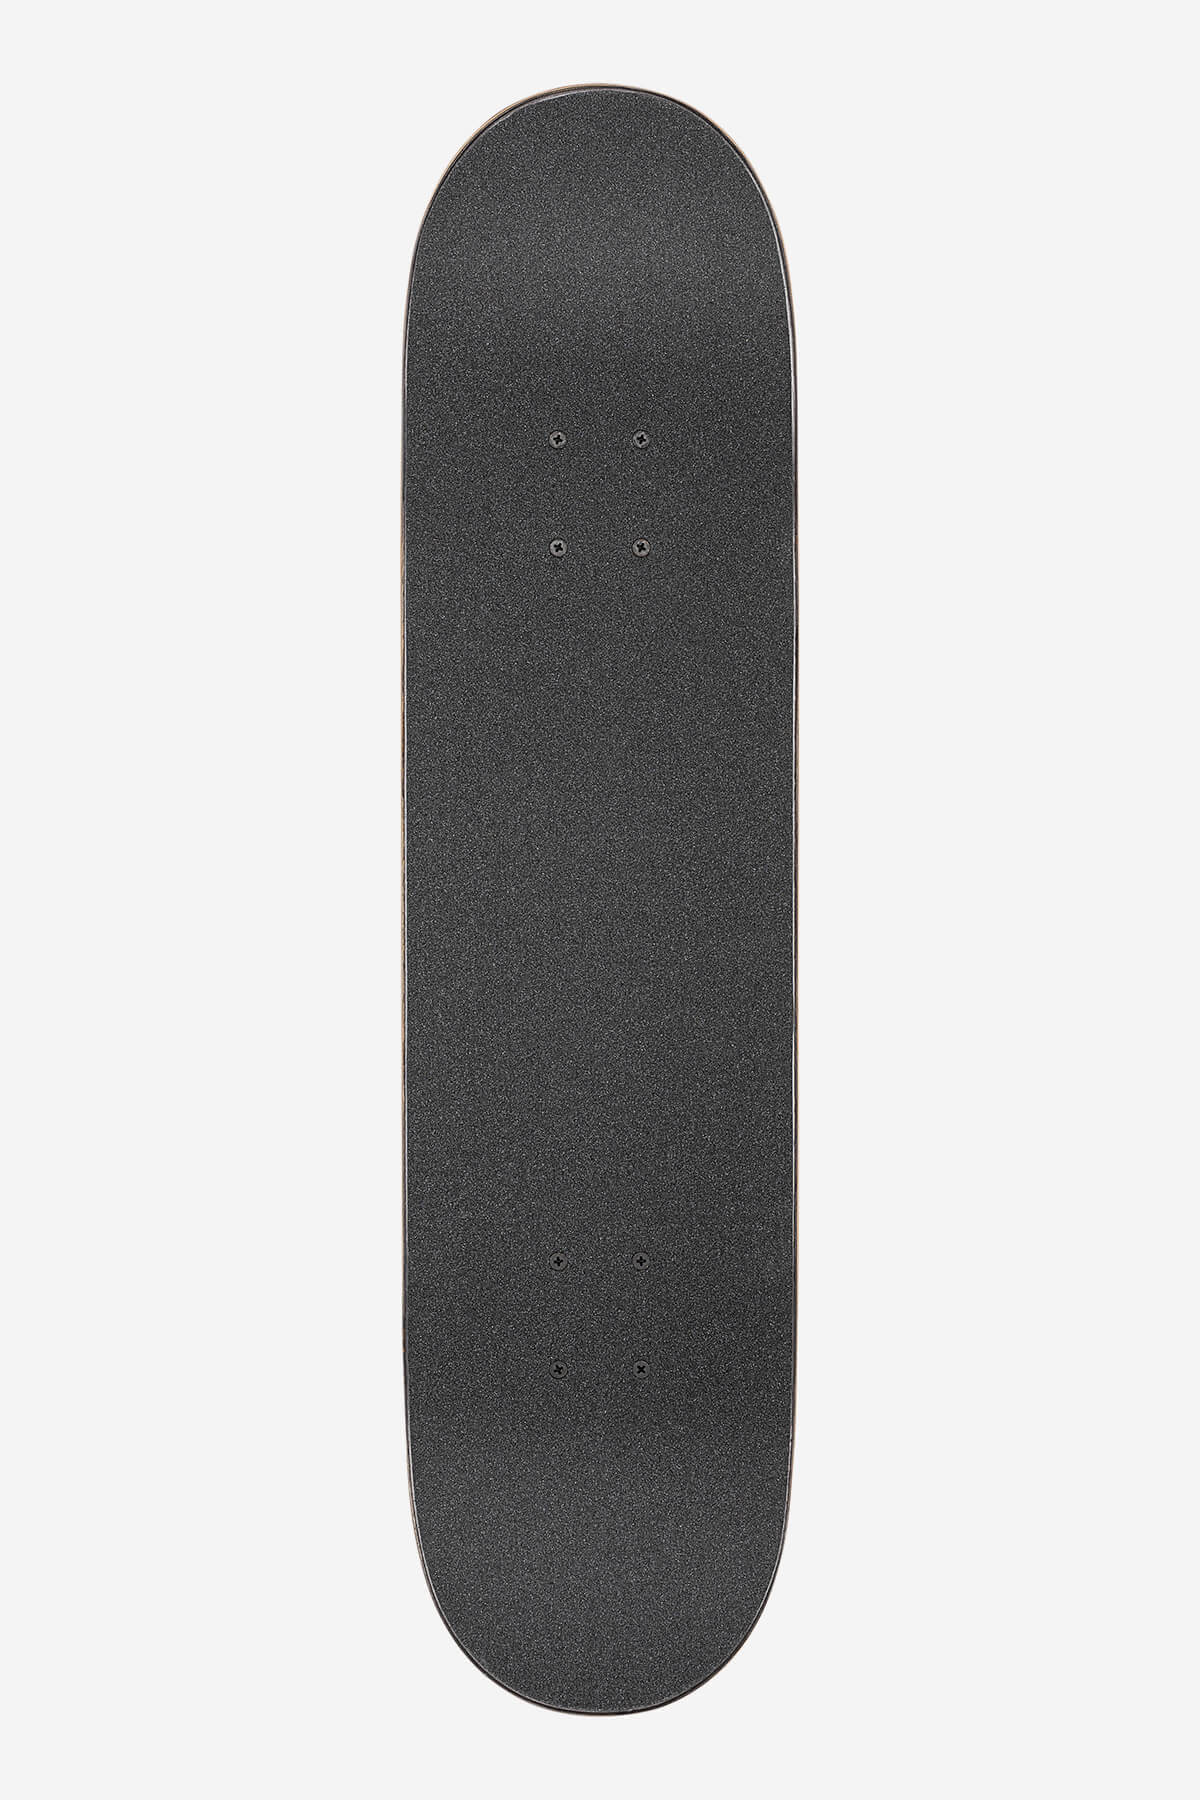 Globe - G1 Ablaze - Tie Dye - 7.75" Completo Skateboard